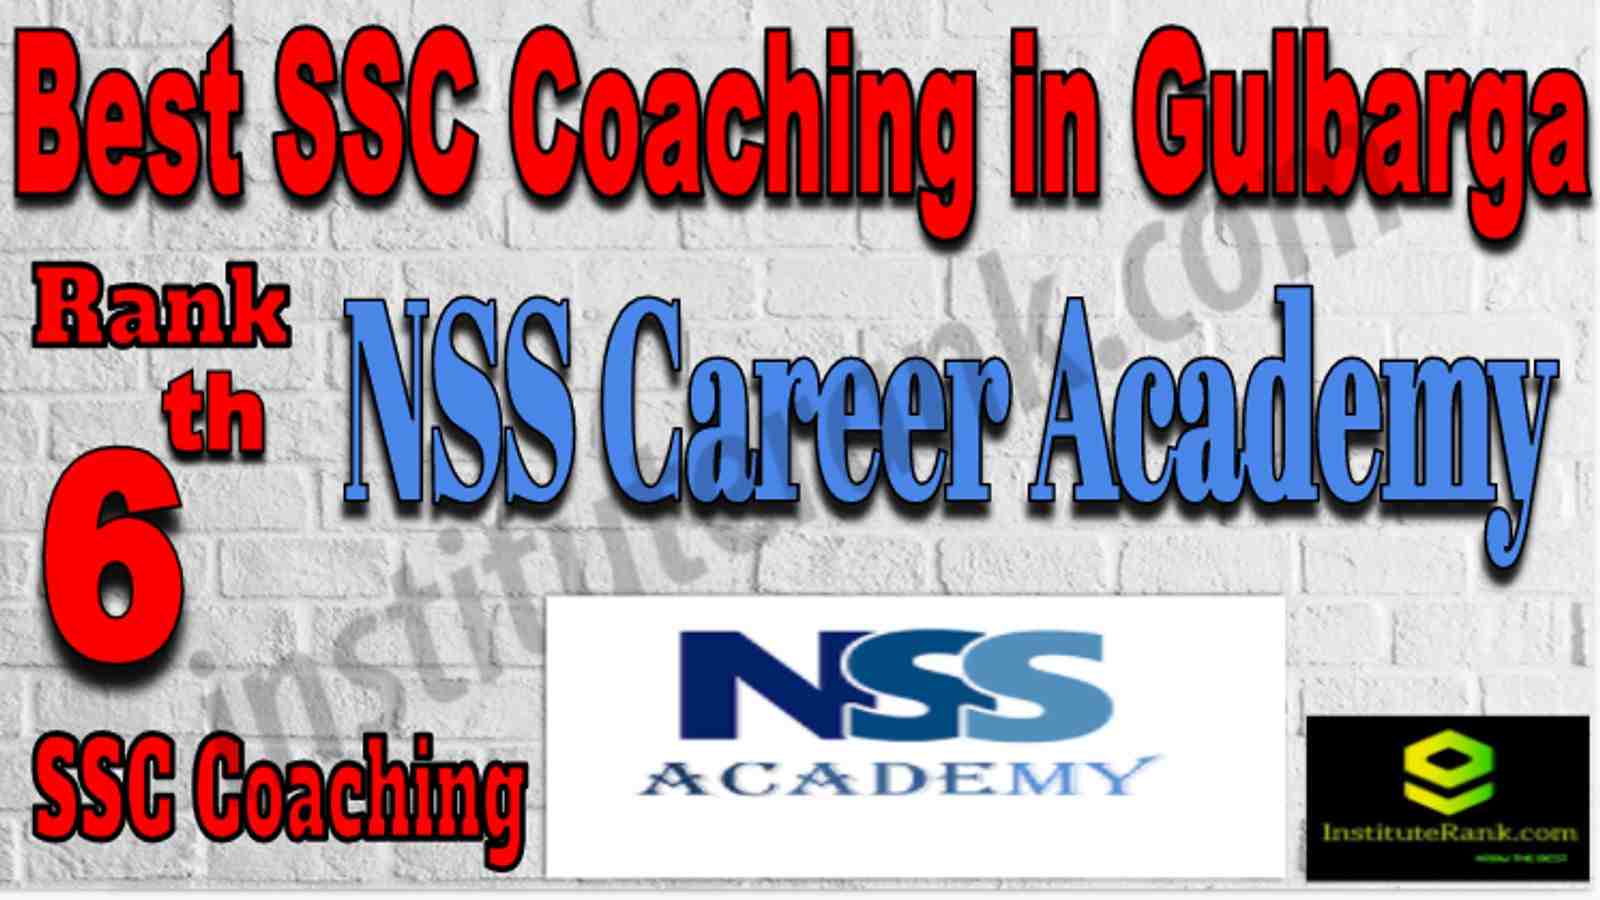 Rank 6 Best SSC Coaching in Gulbarga